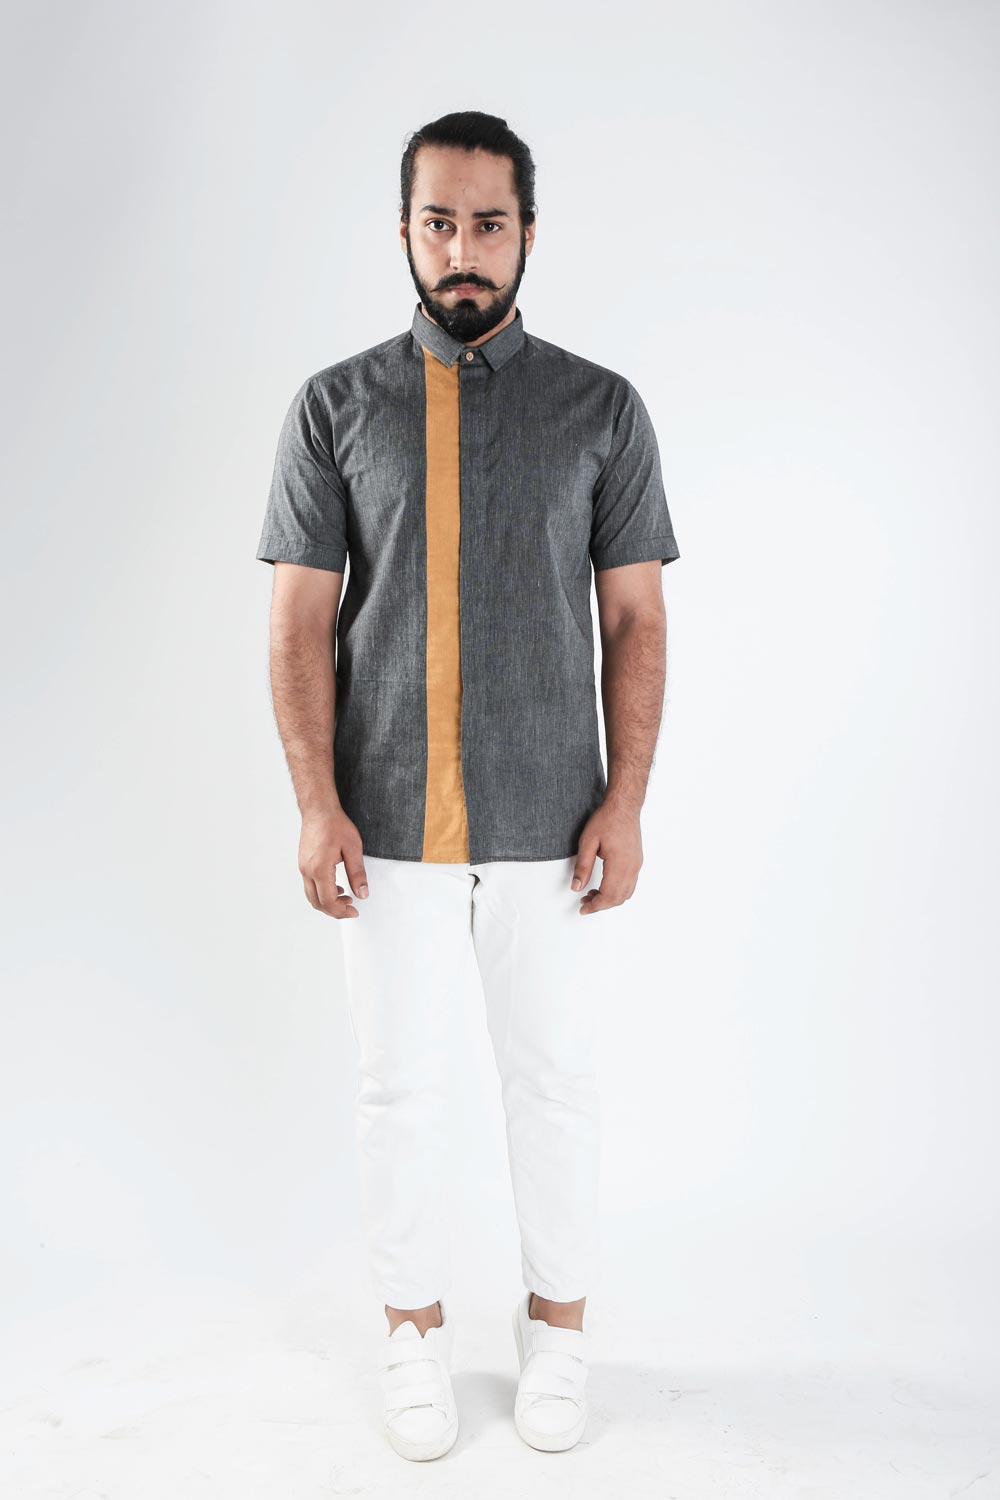 Handloom Shirt With Contrast Panel as seen on Irrfan Khan